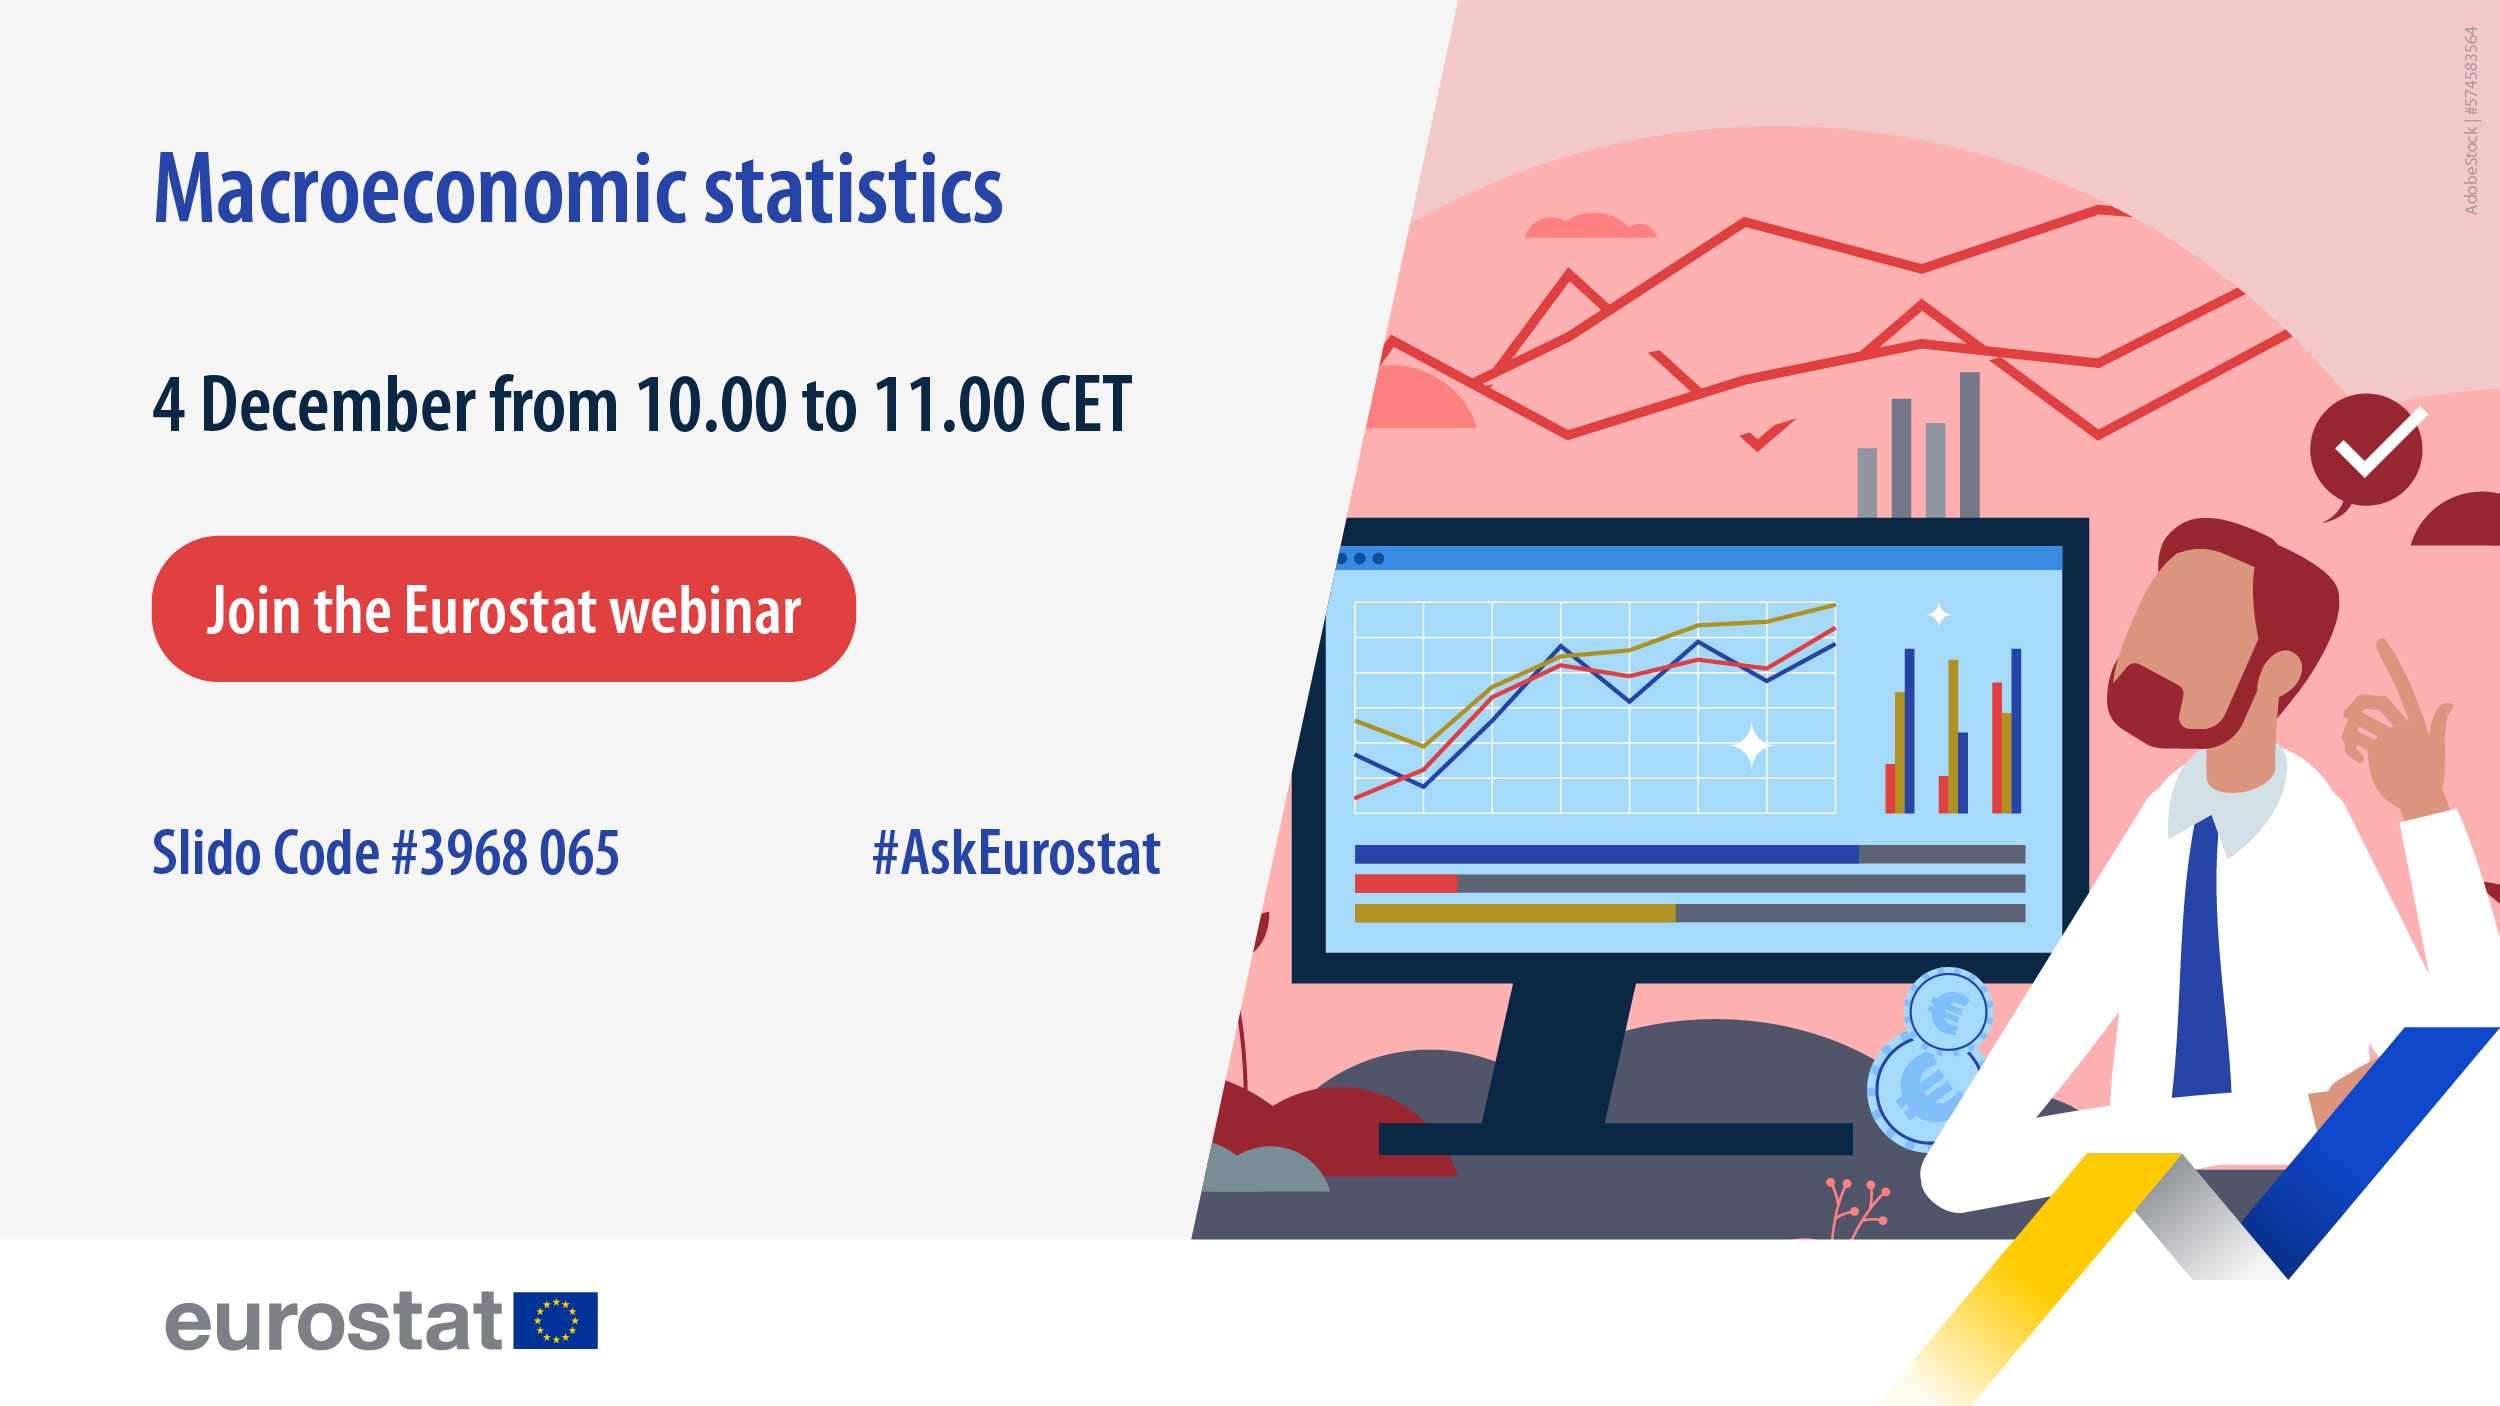 webinar poster: webinar on macroeconomic statistics, 4 December, 10:00 AM to 11:00 AM CET